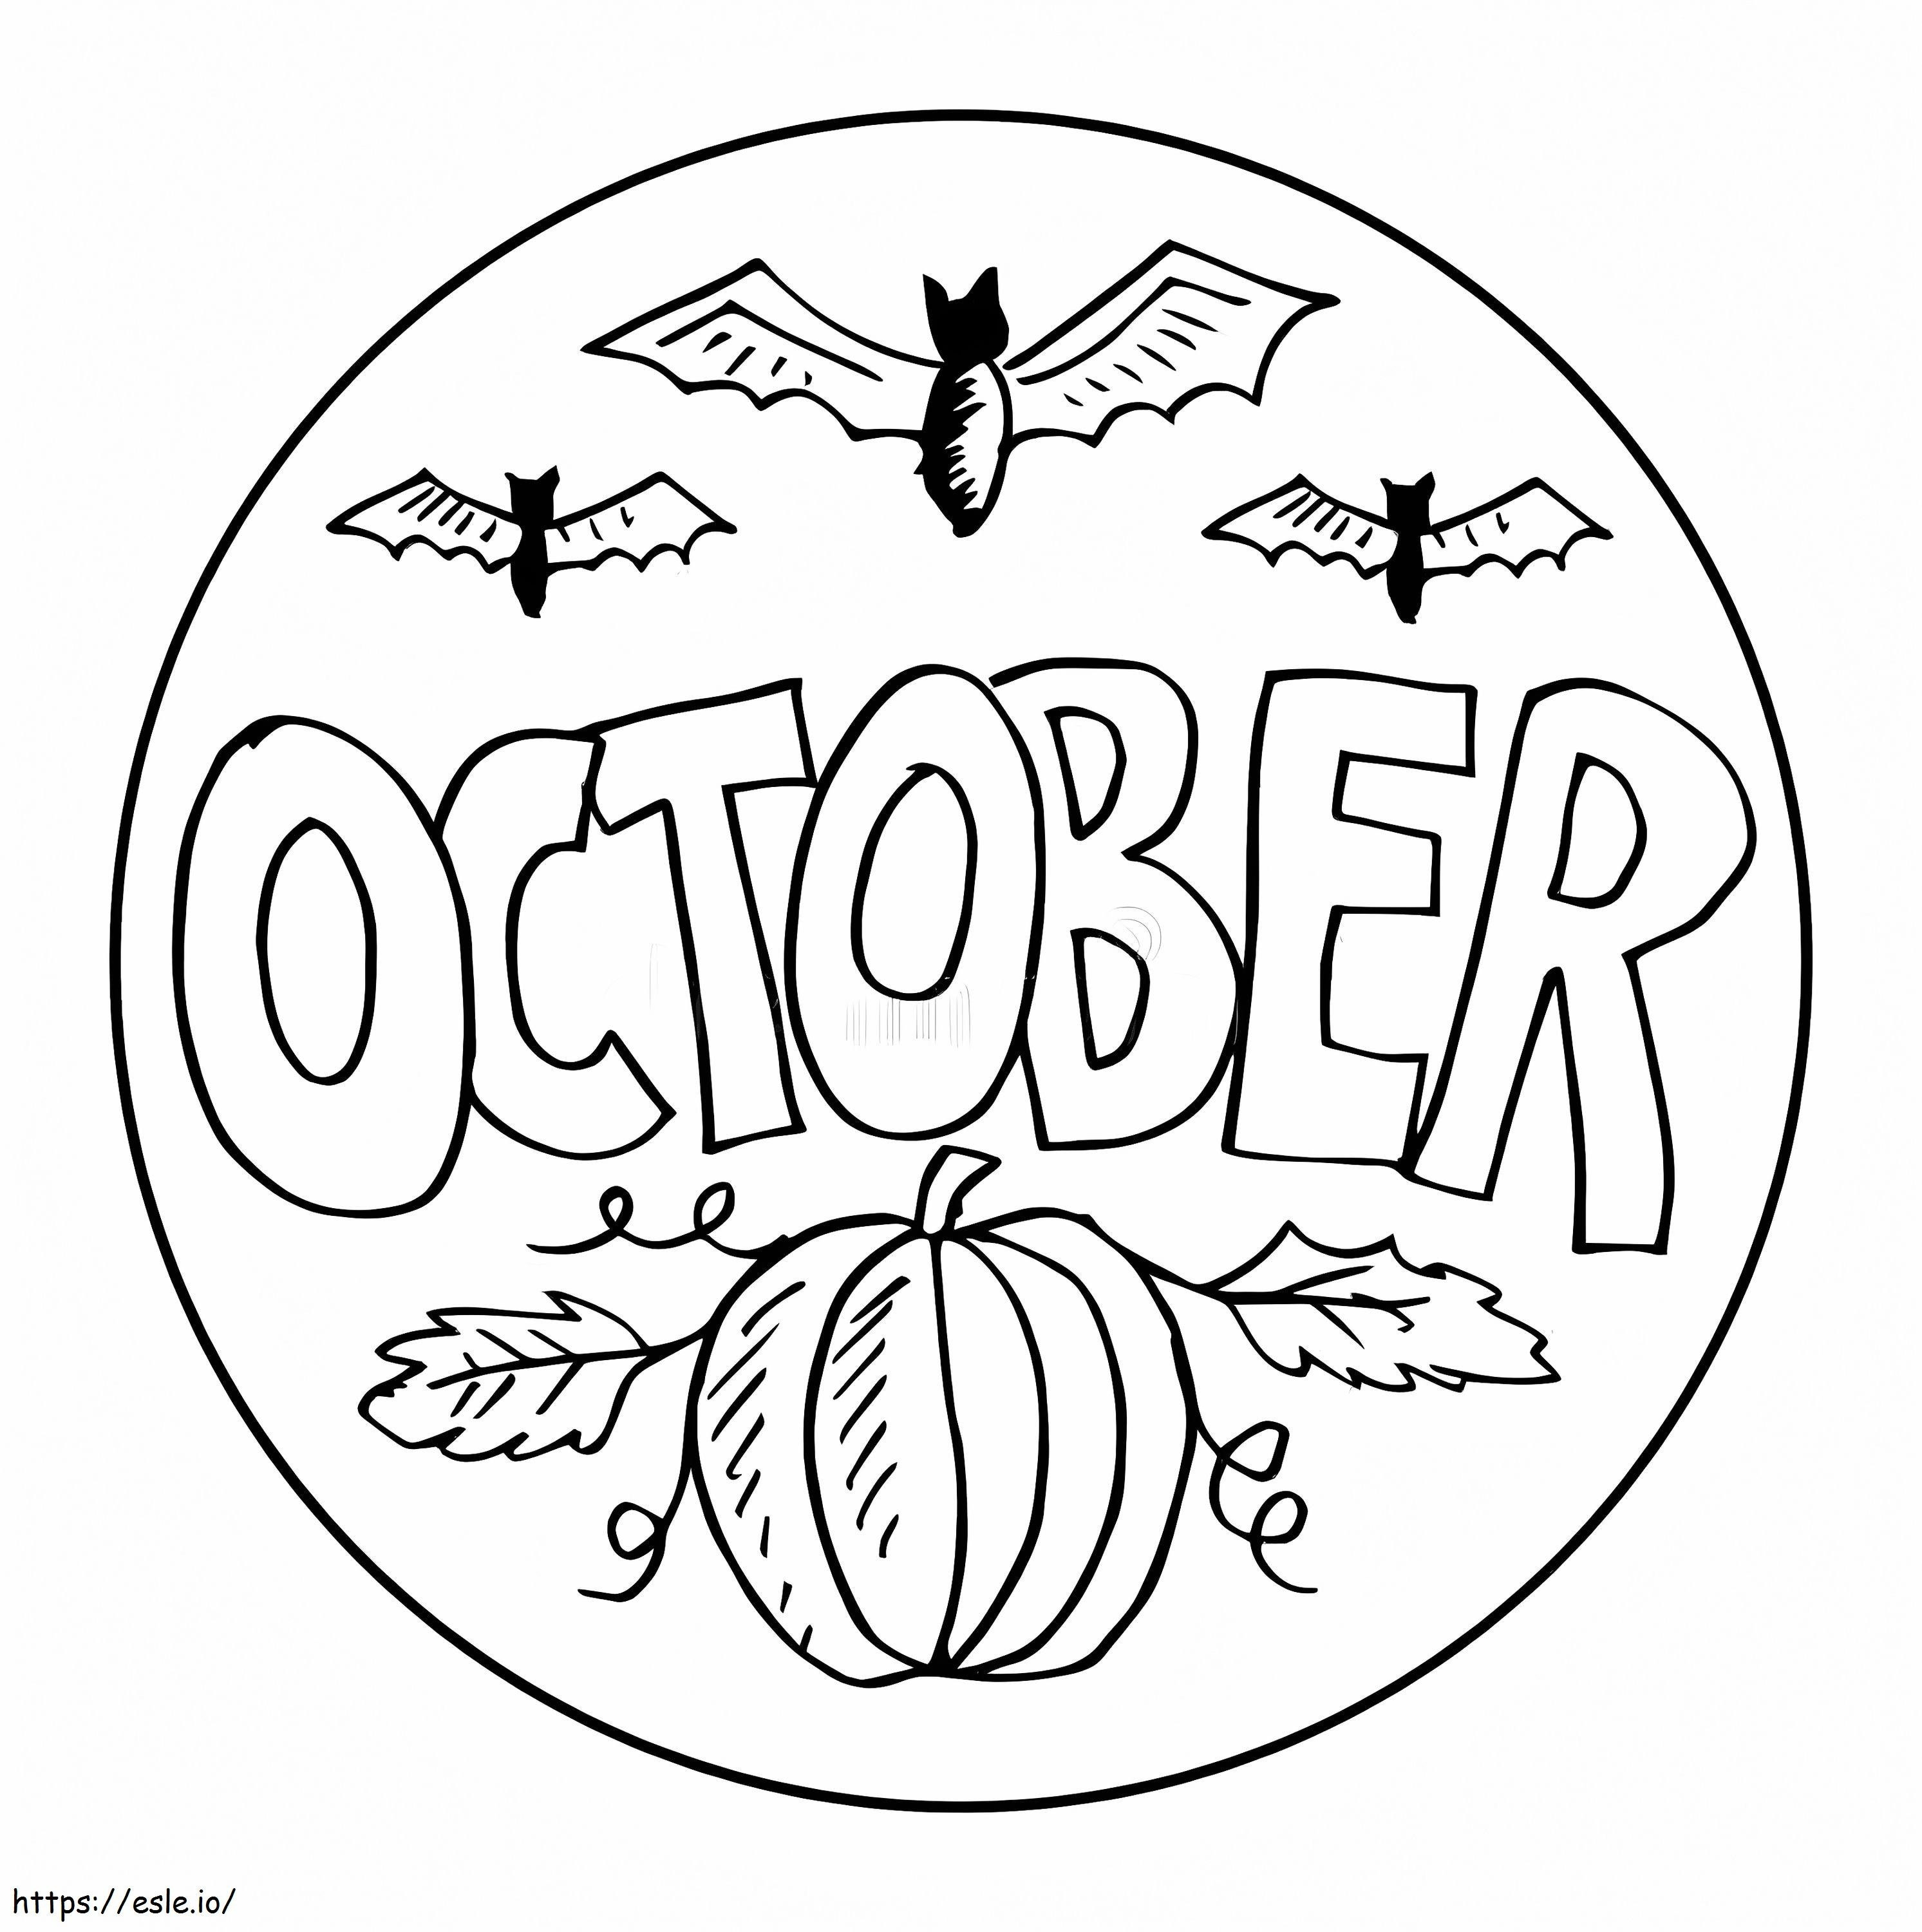 Oktober-logo kleurplaat kleurplaat